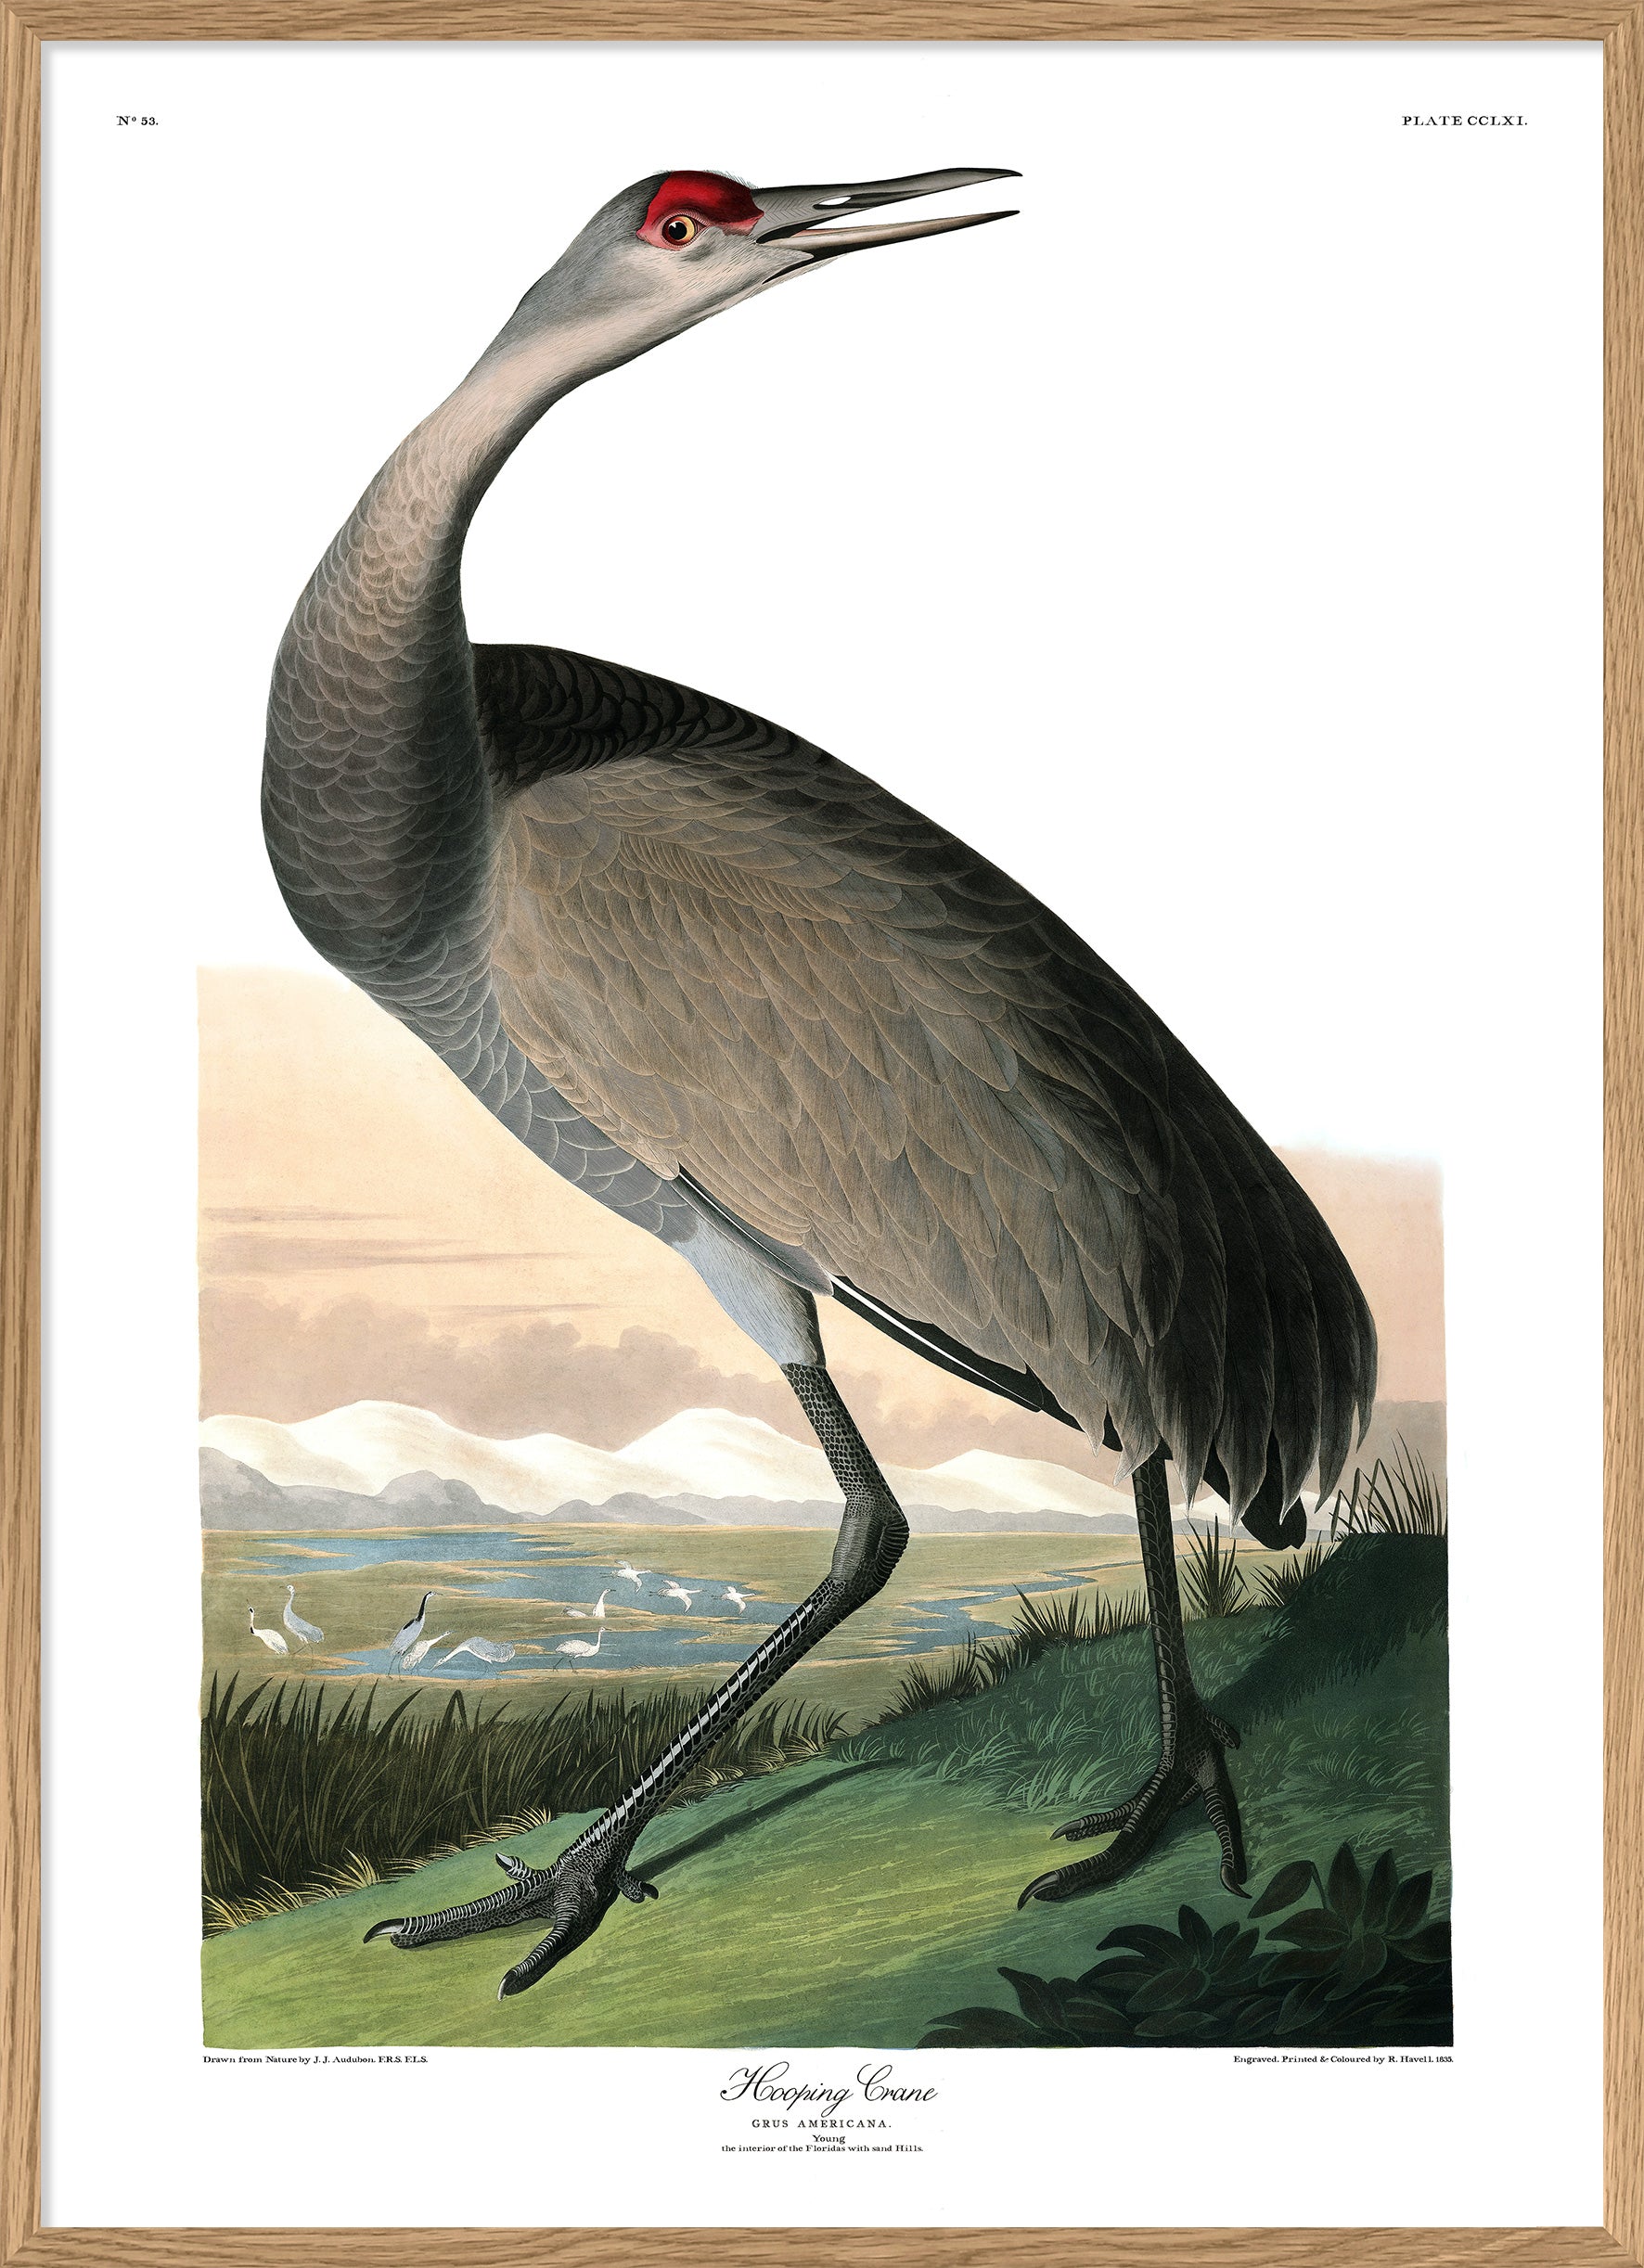 Hooping Crane Audubon Reproduction Print Poster from Dybdahl Birds of America Series